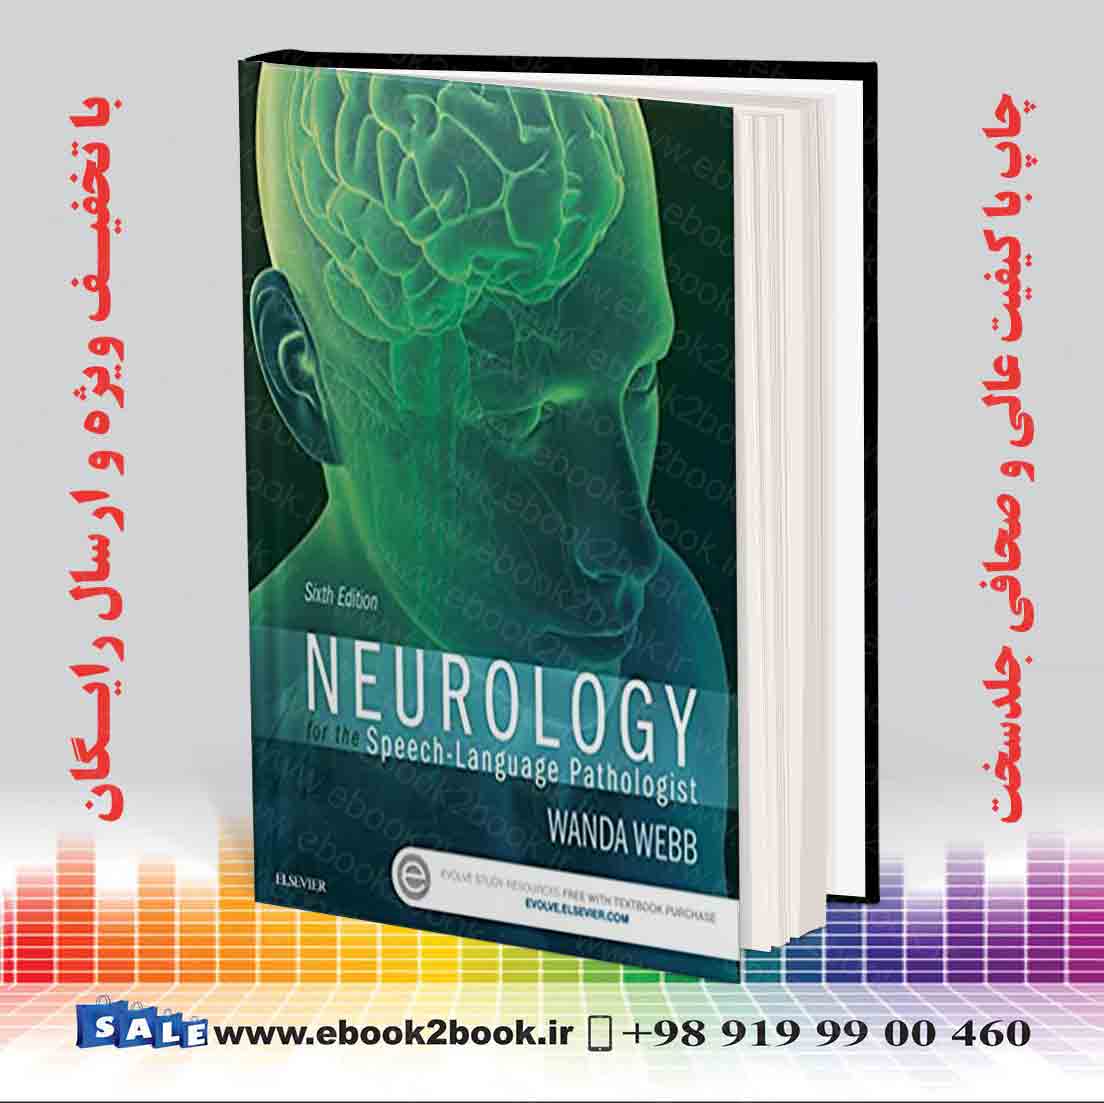 neurology for the speech language pathologist 6th edition pdf free